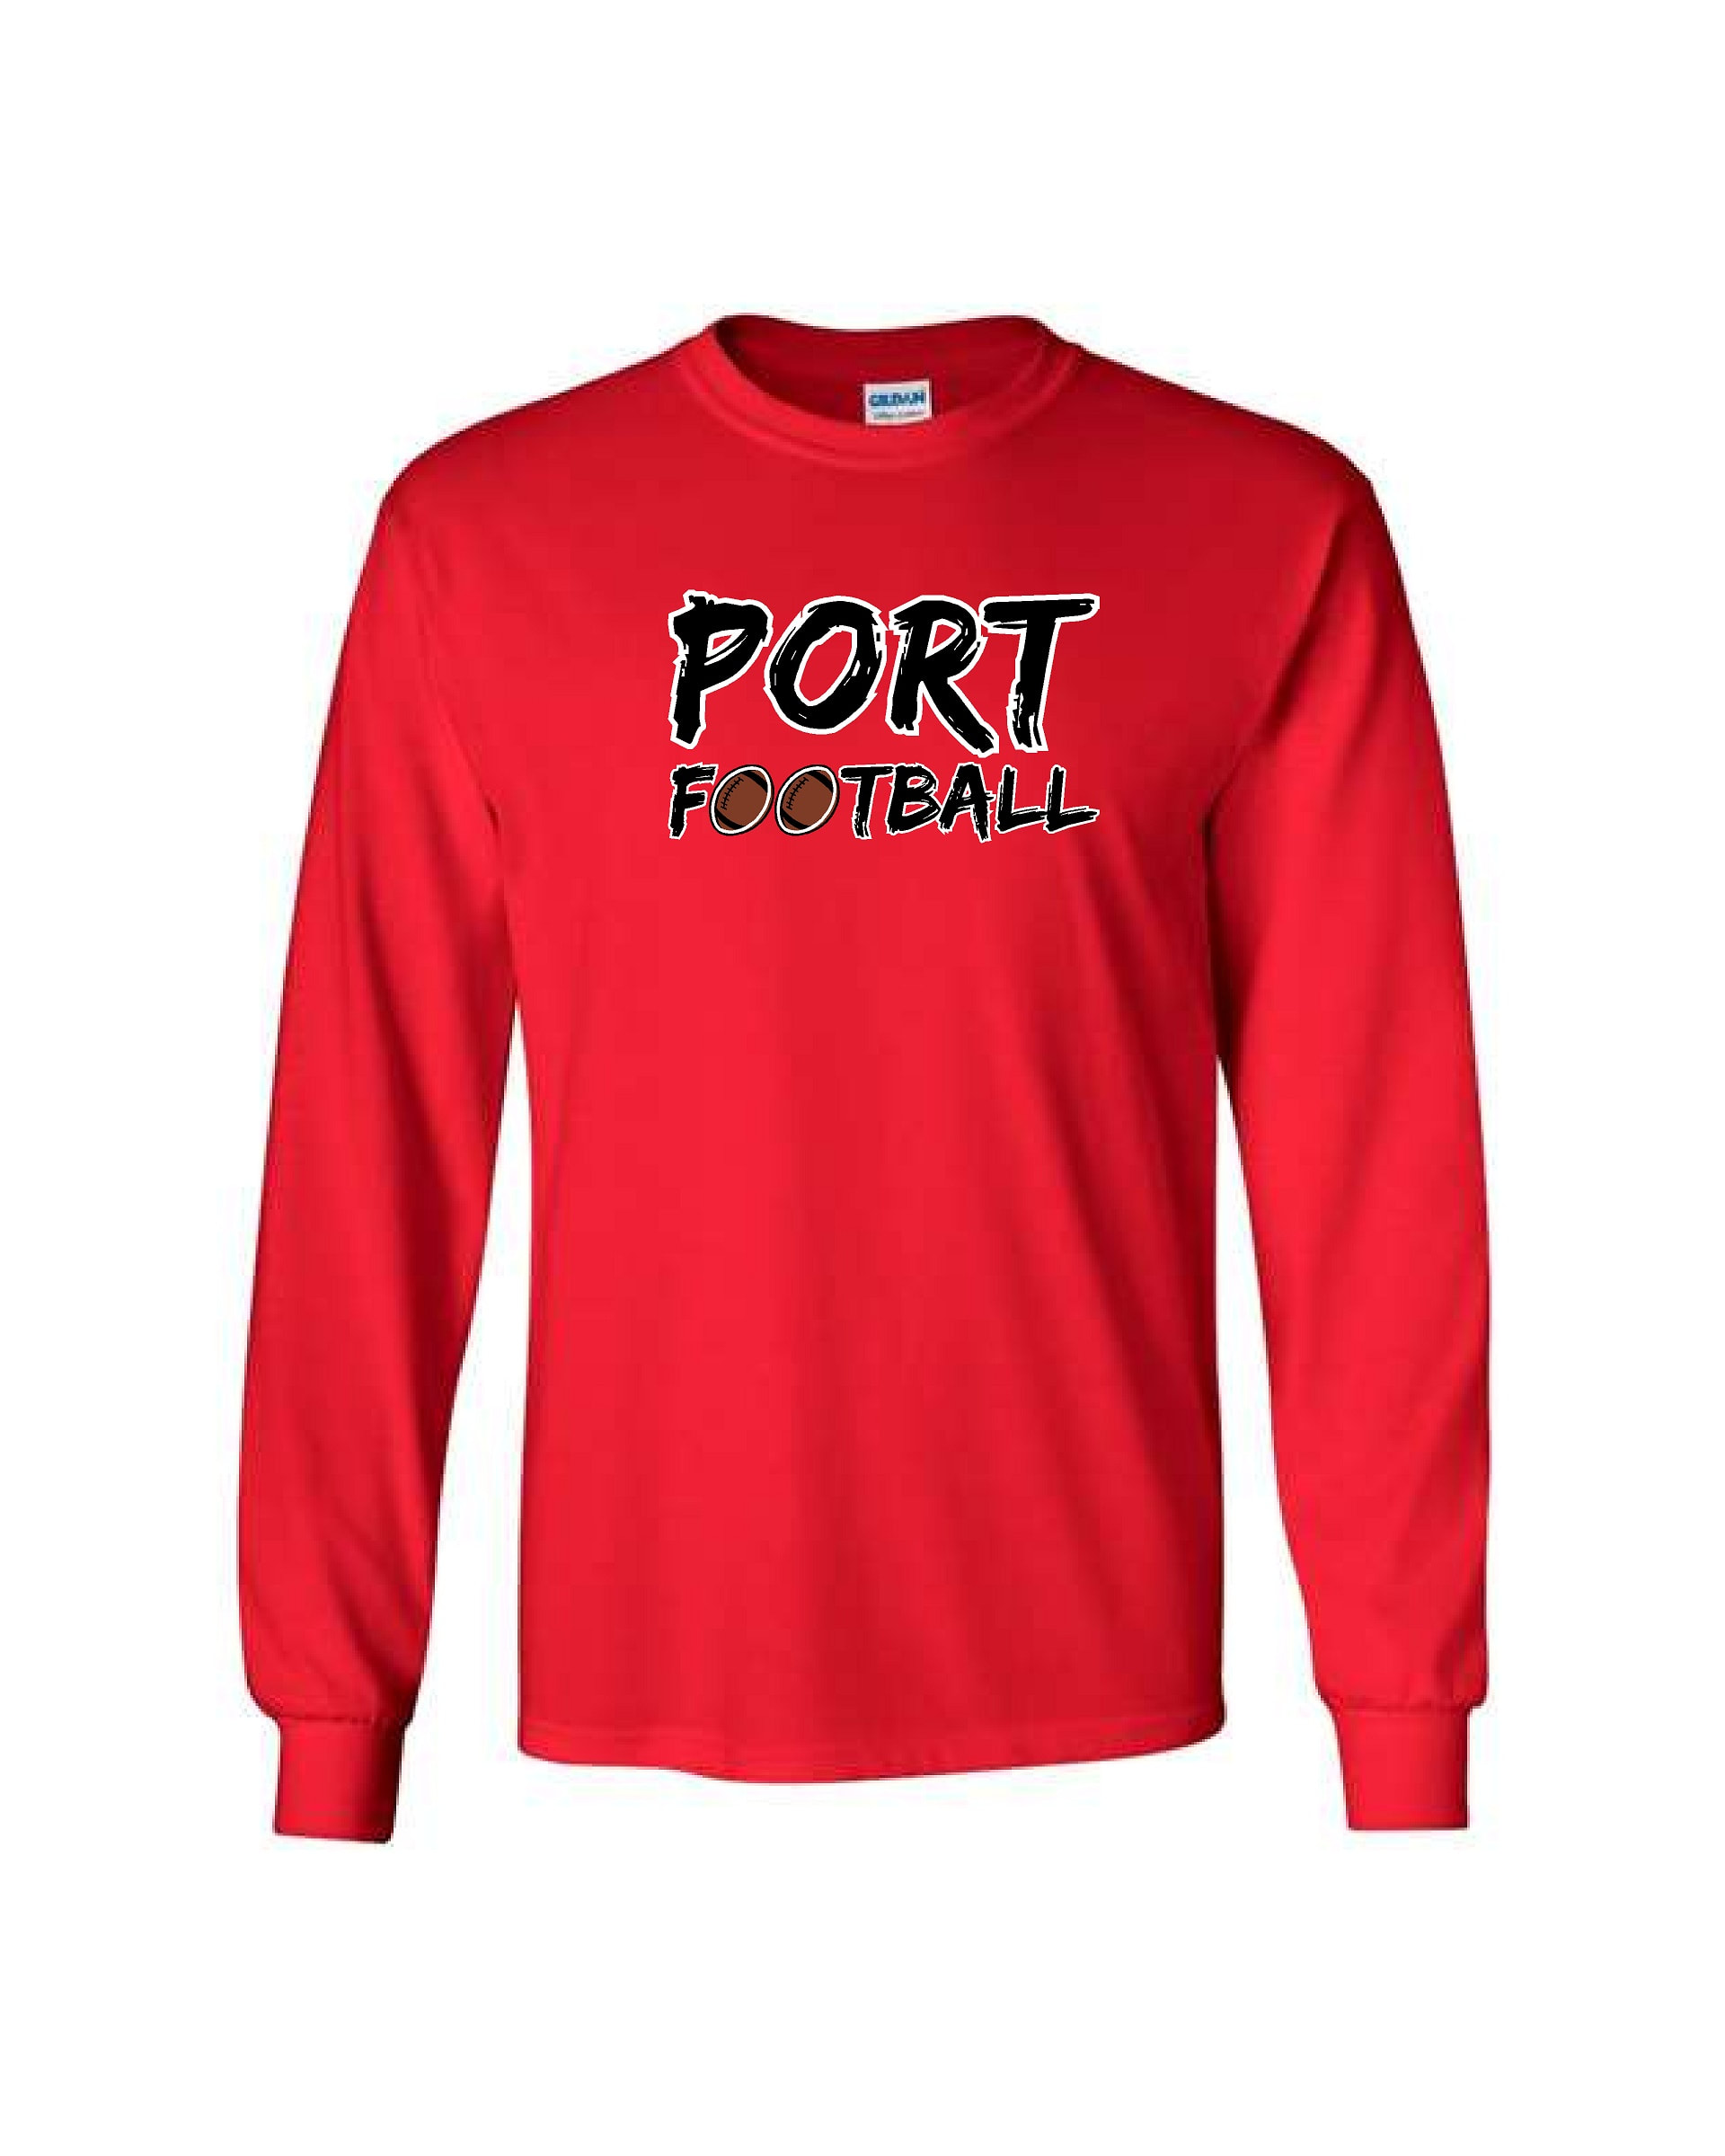 Long Sleeve Tee Shirt - PORT FOOTBALL - RED